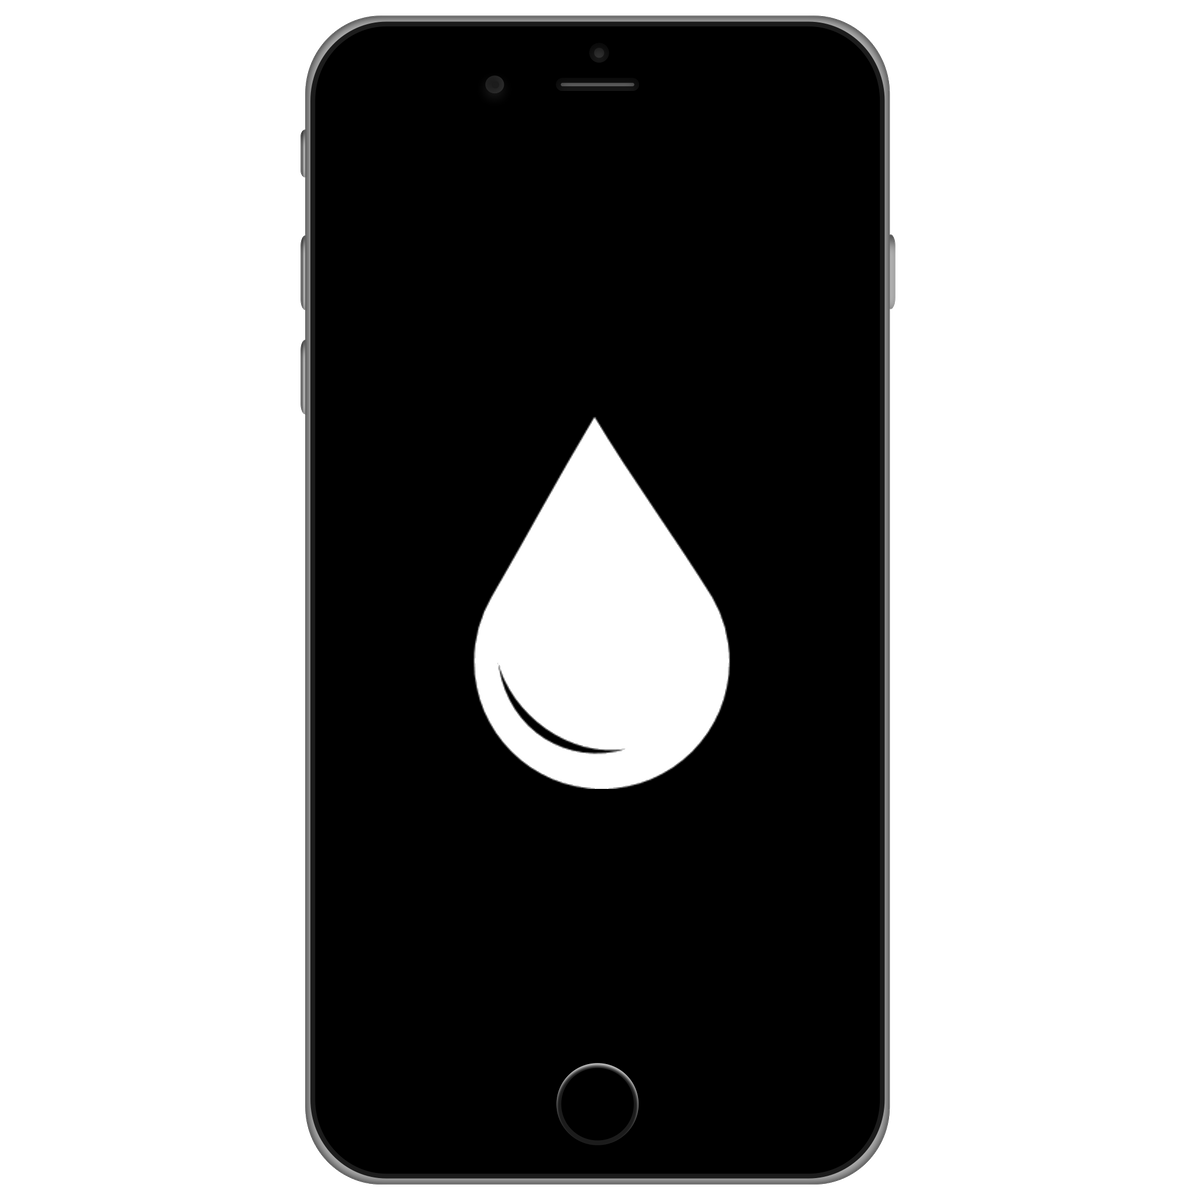 Repair iPhone X Water Damage - TechPros